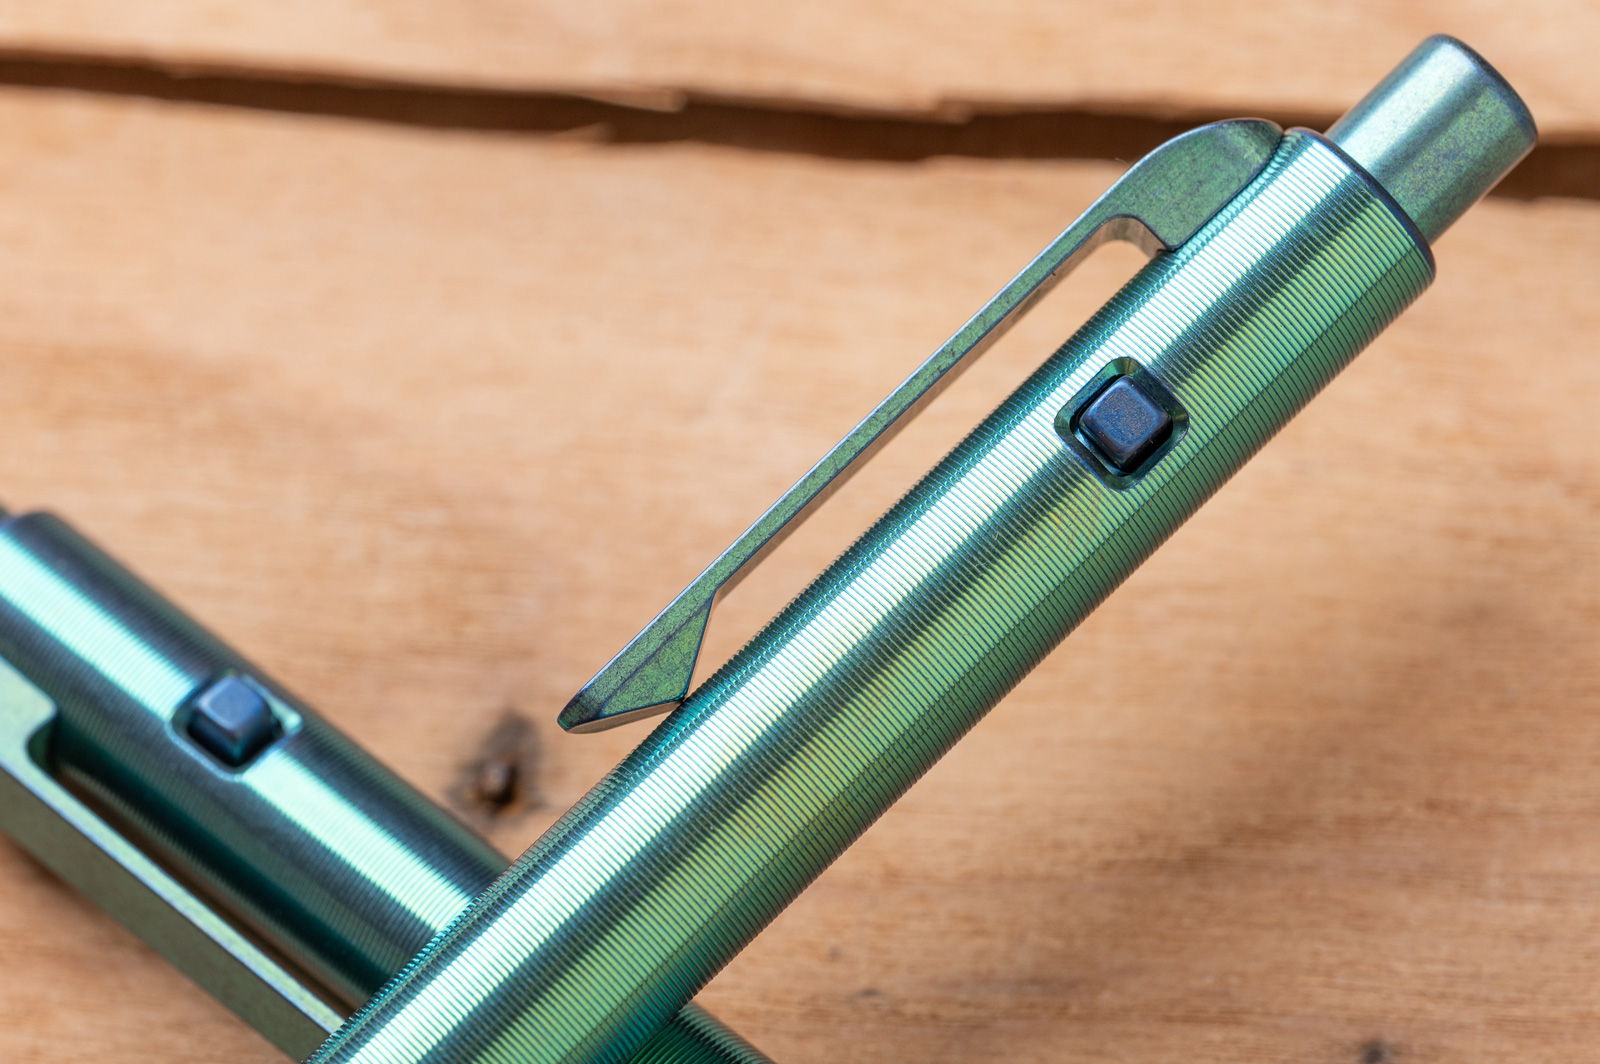 Tactile Turn – Grüner zweifarbiger Ano-Side-Click-Stift